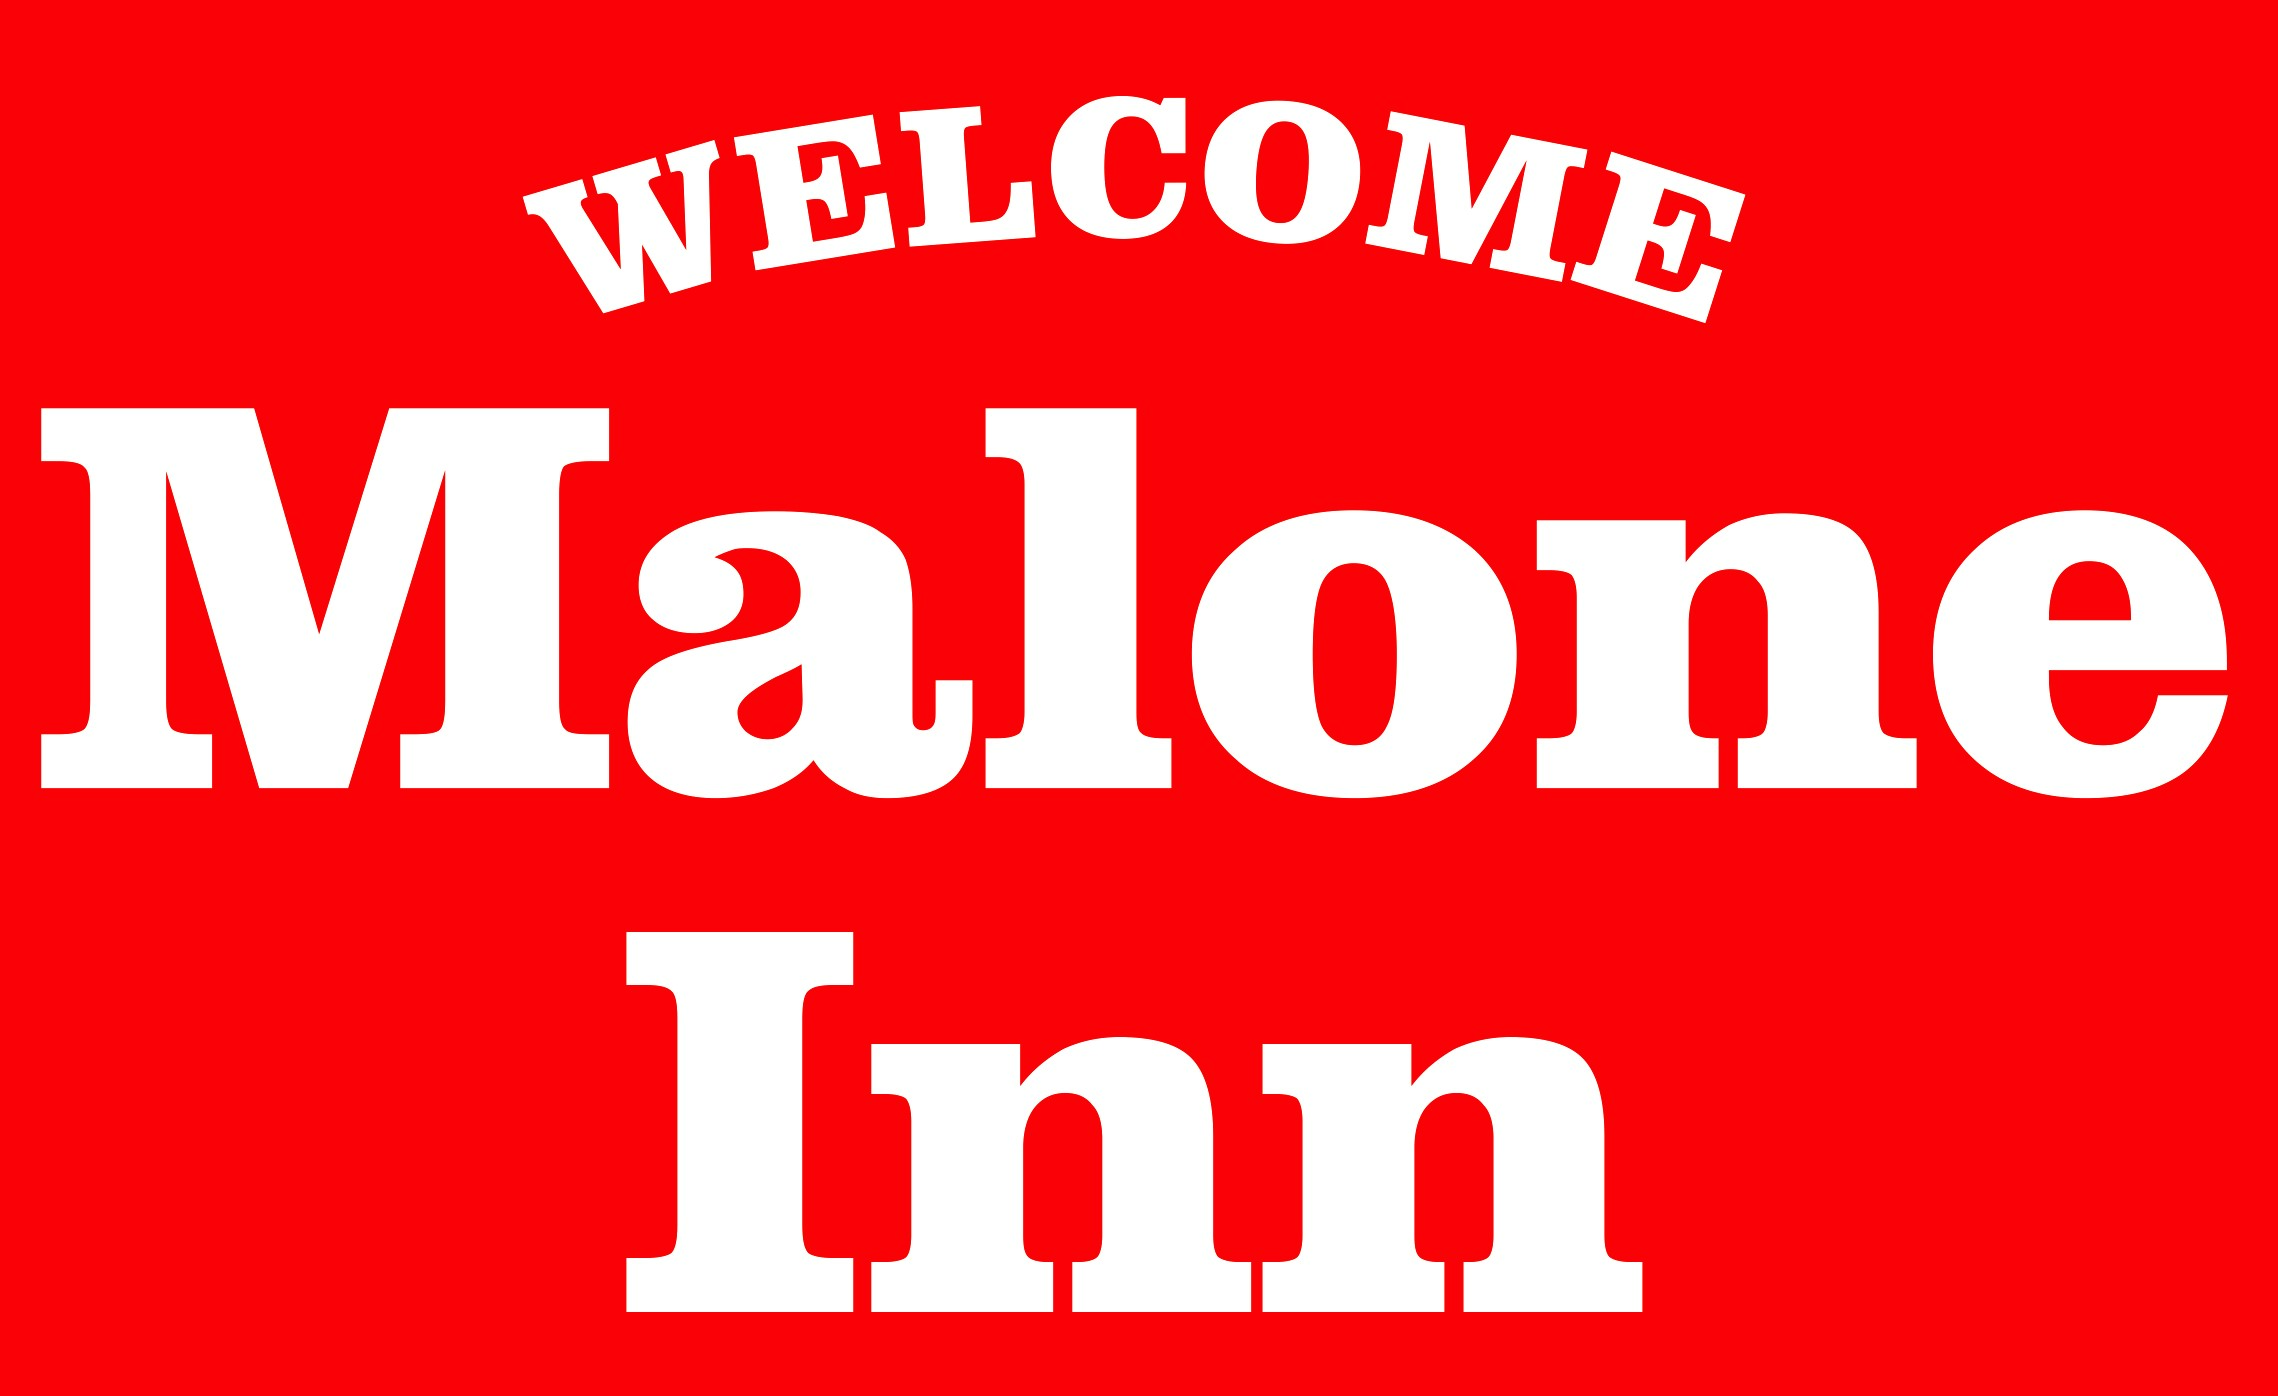 Malone Inn